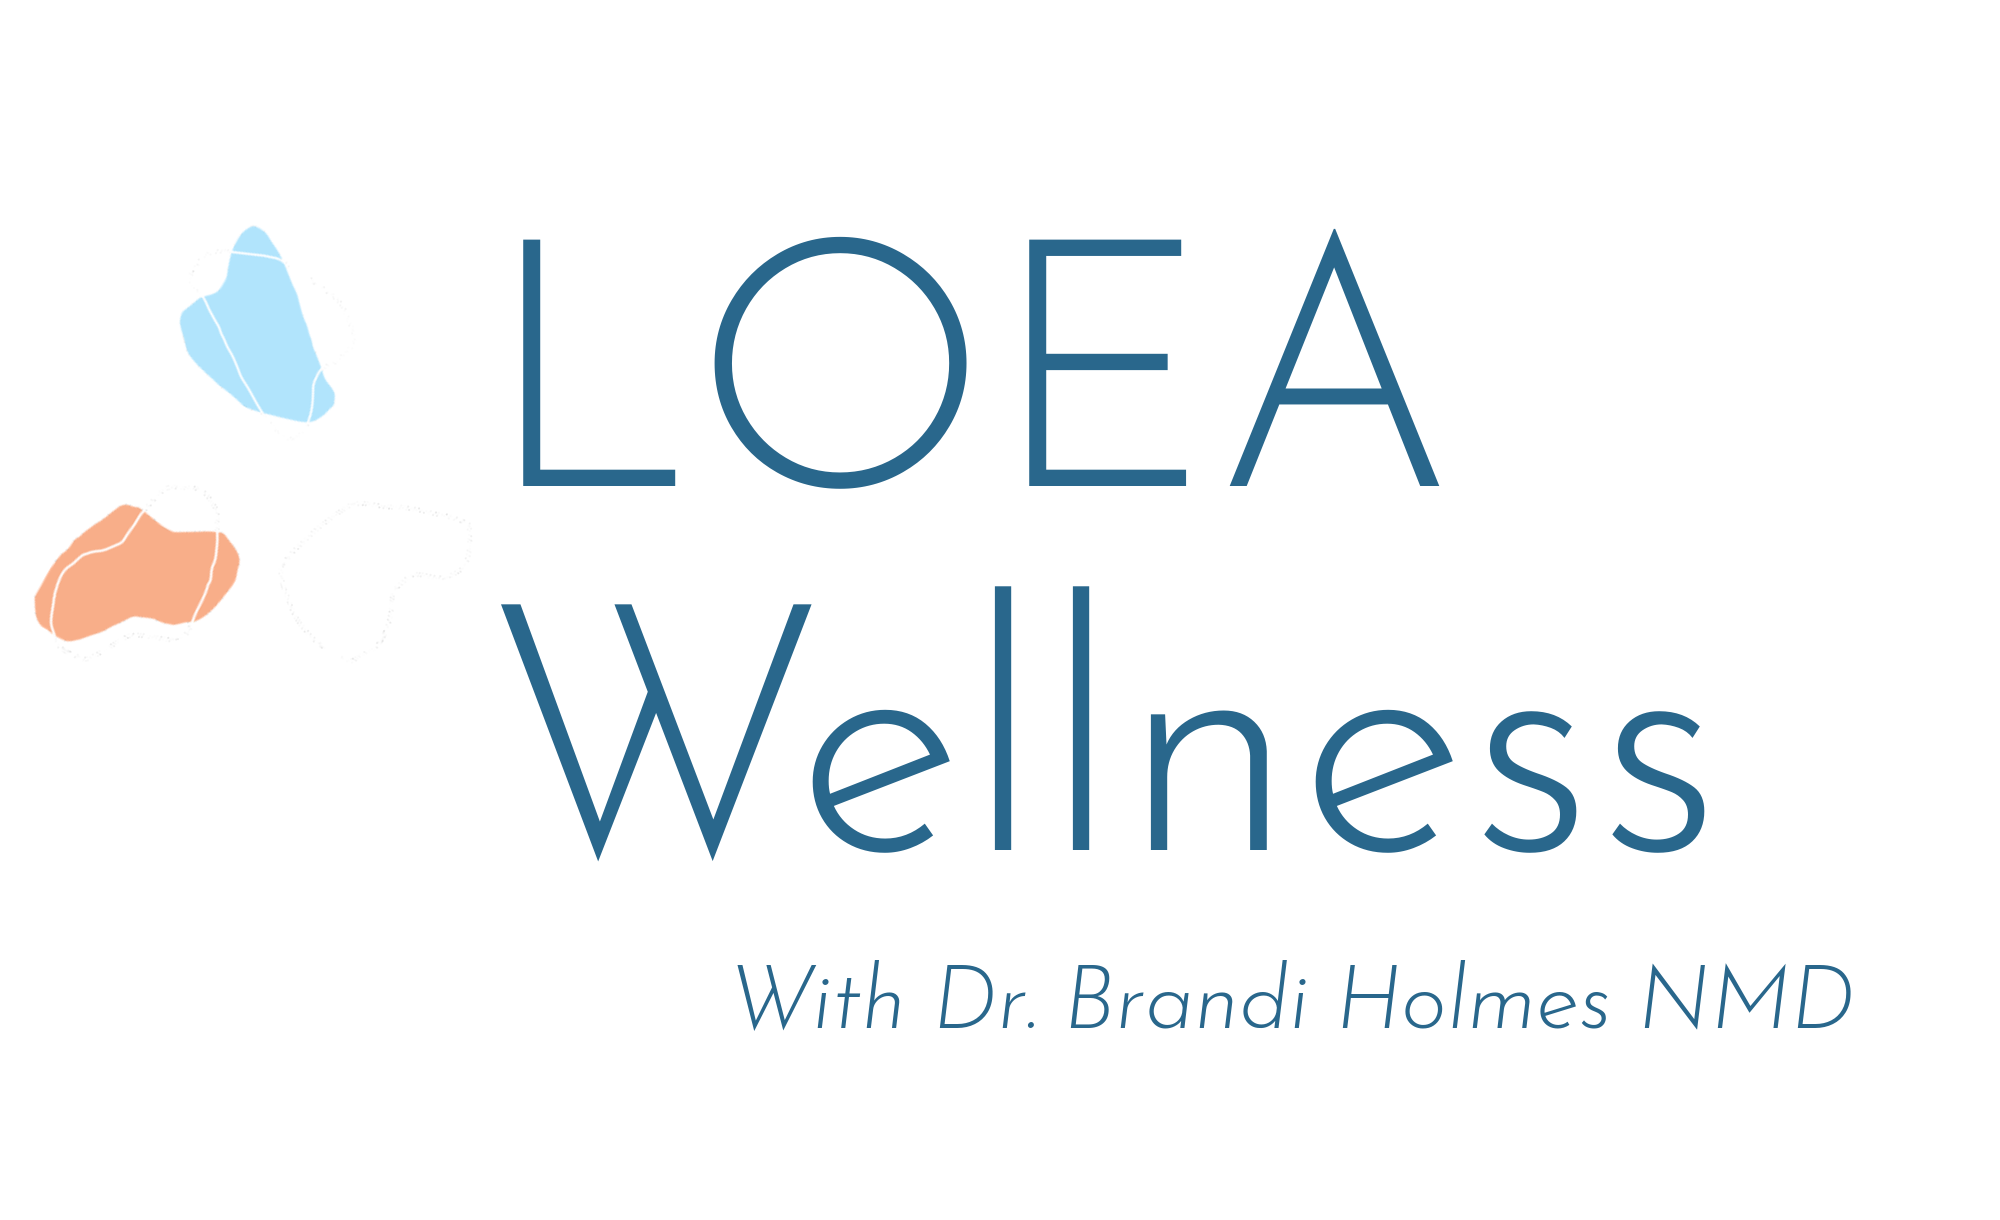 LOEA Wellness